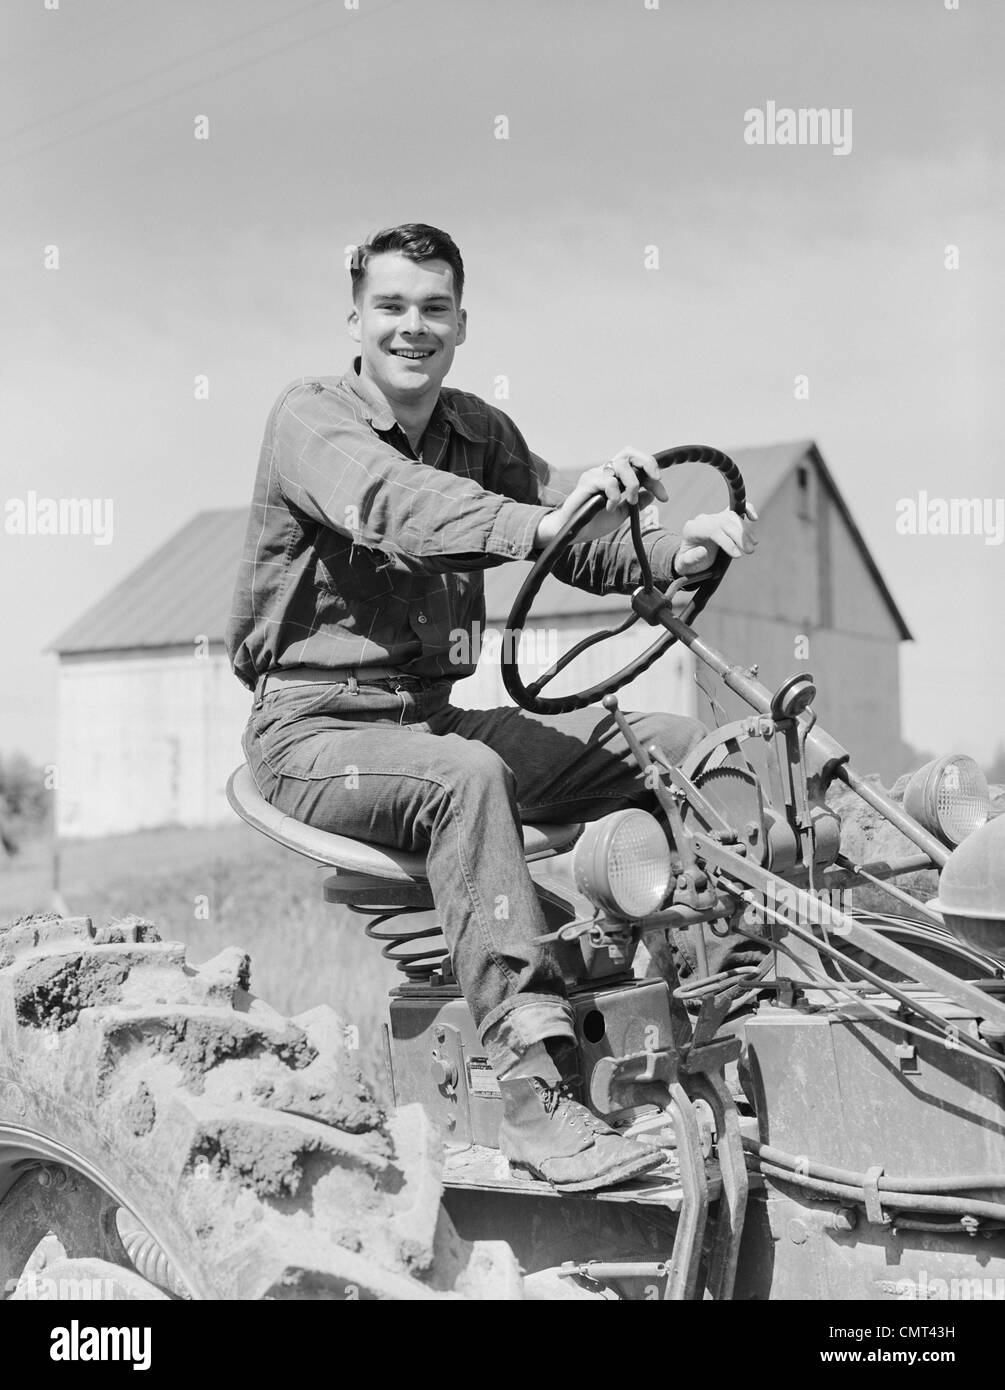 1950s SMILING MAN FARMER DRIVING TRACTOR LOOKING AT CAMERA Stock Photo